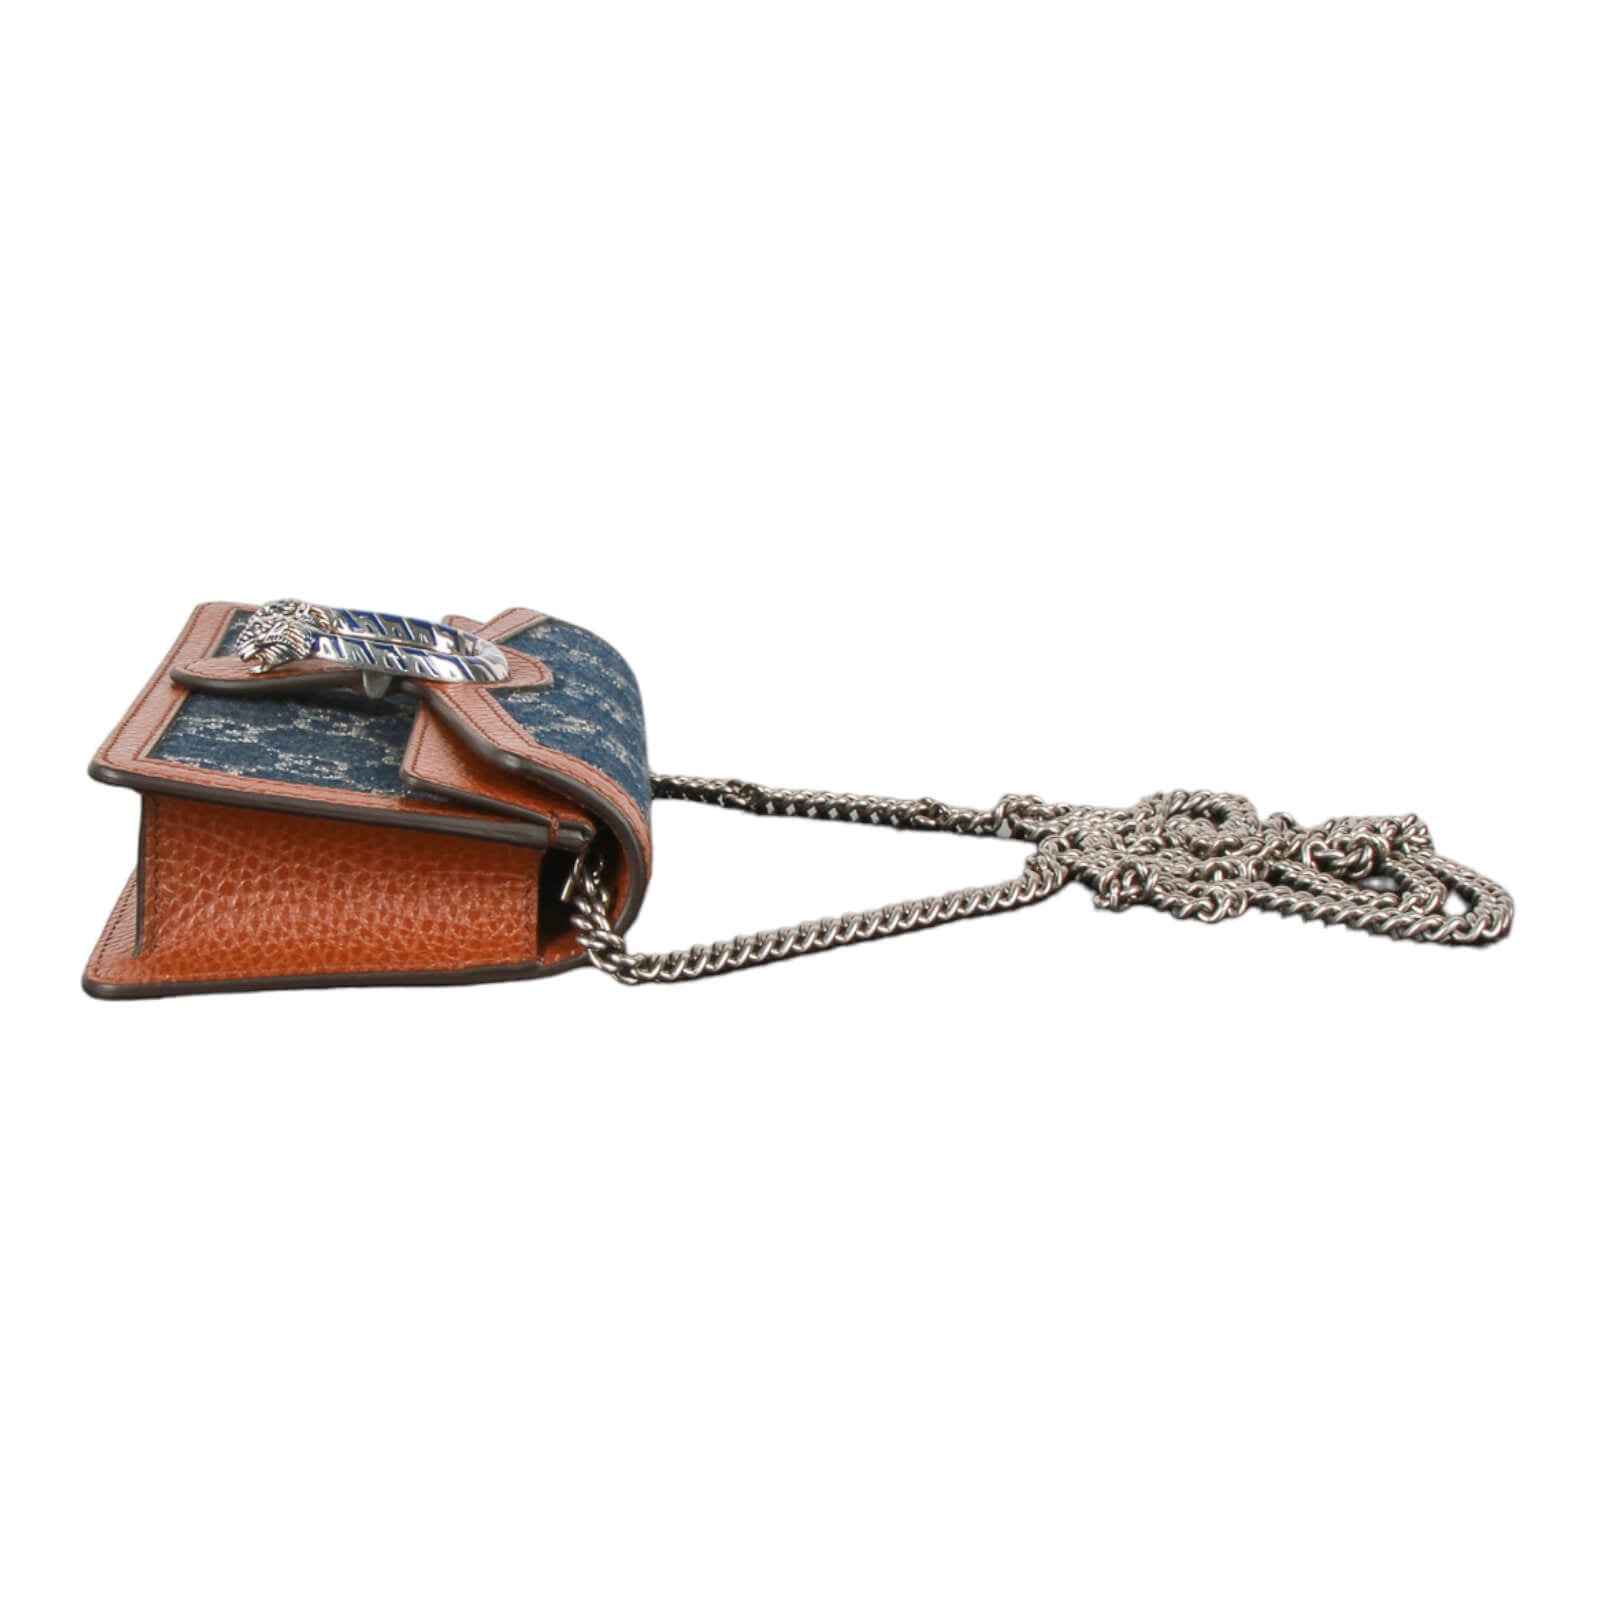 Denim GG Monogram Mini Dionysus Chain Wallet Blue Tea Cuir, Gucci, Handbag